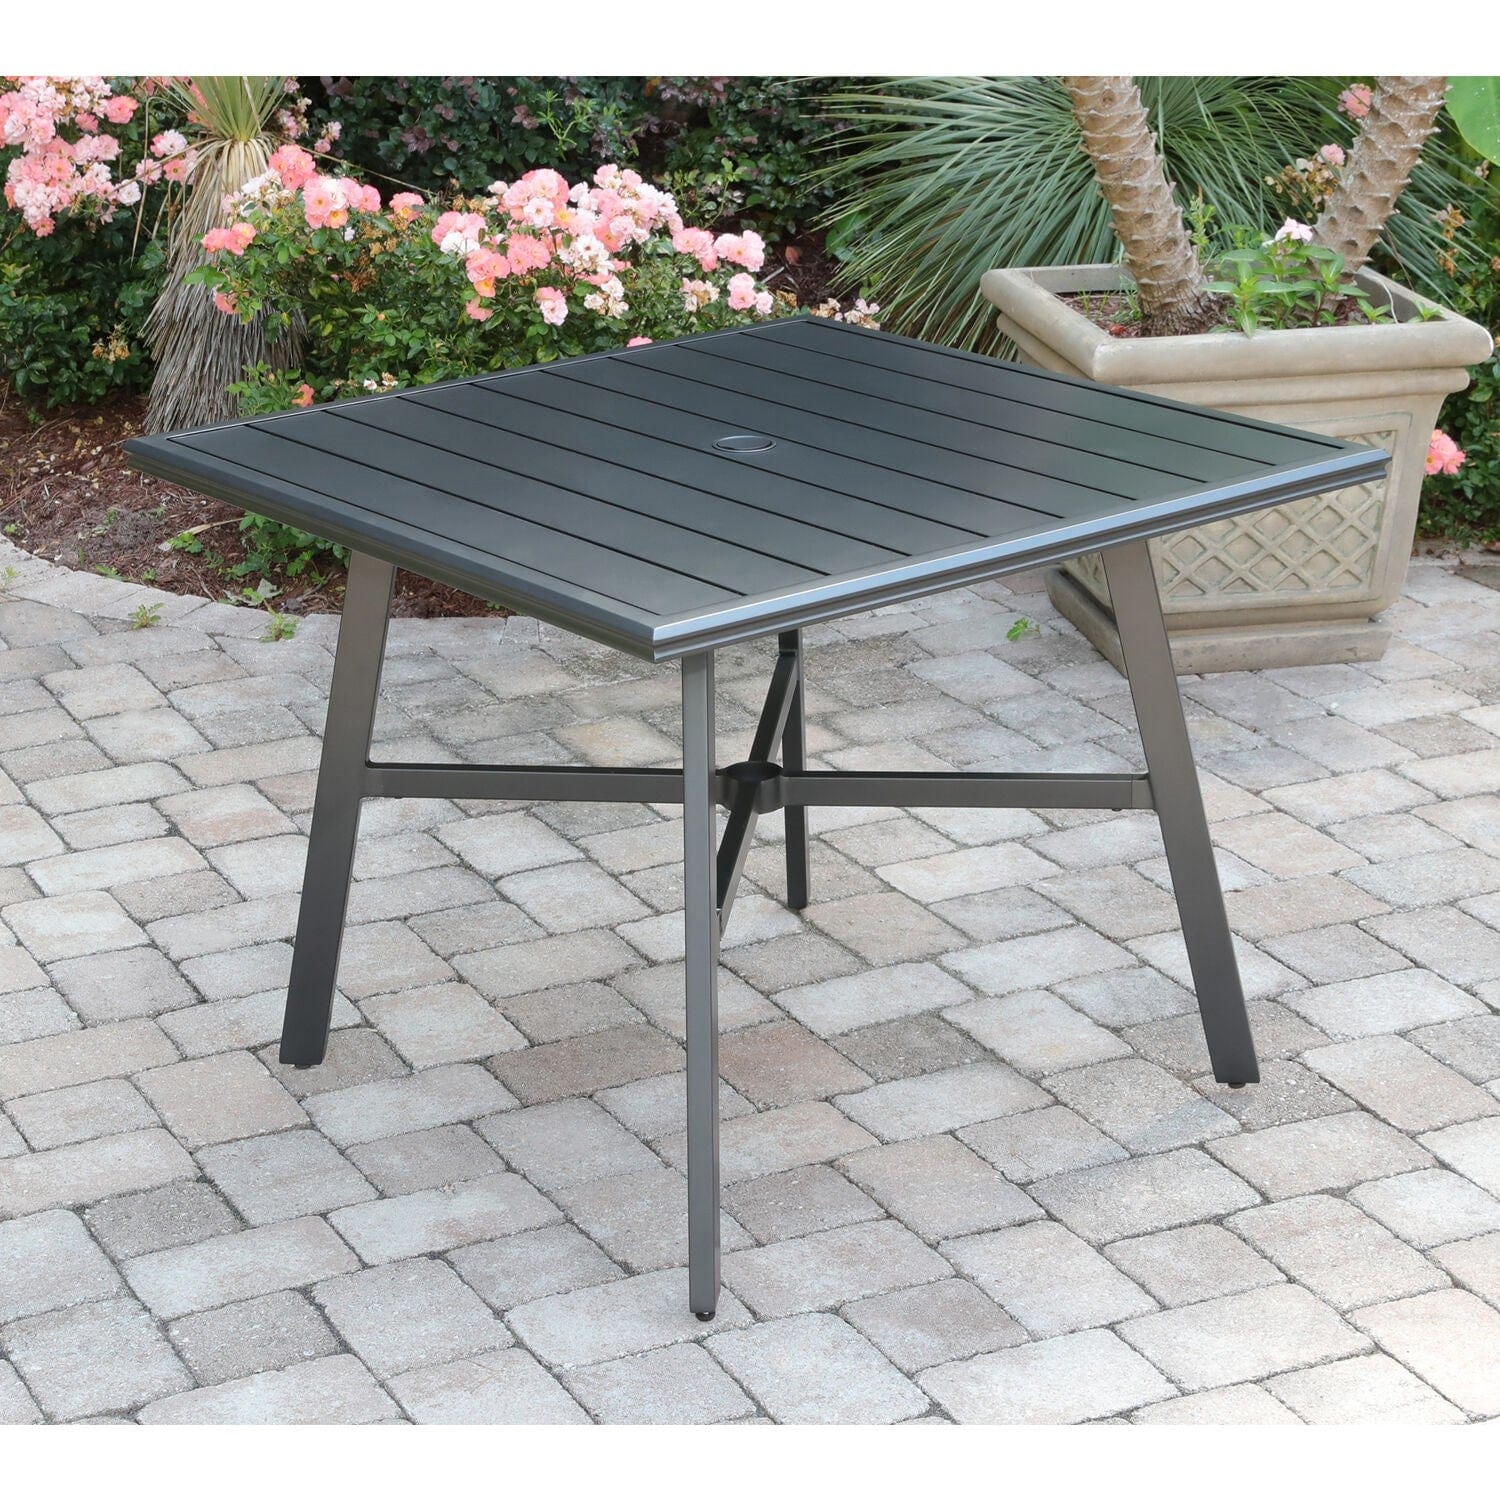 Hanover Outdoor Dining Table Hanover - Commercial Aluminum 38" Square Slat Top Table - Gunmetal - HANCMDNTBL-38SL